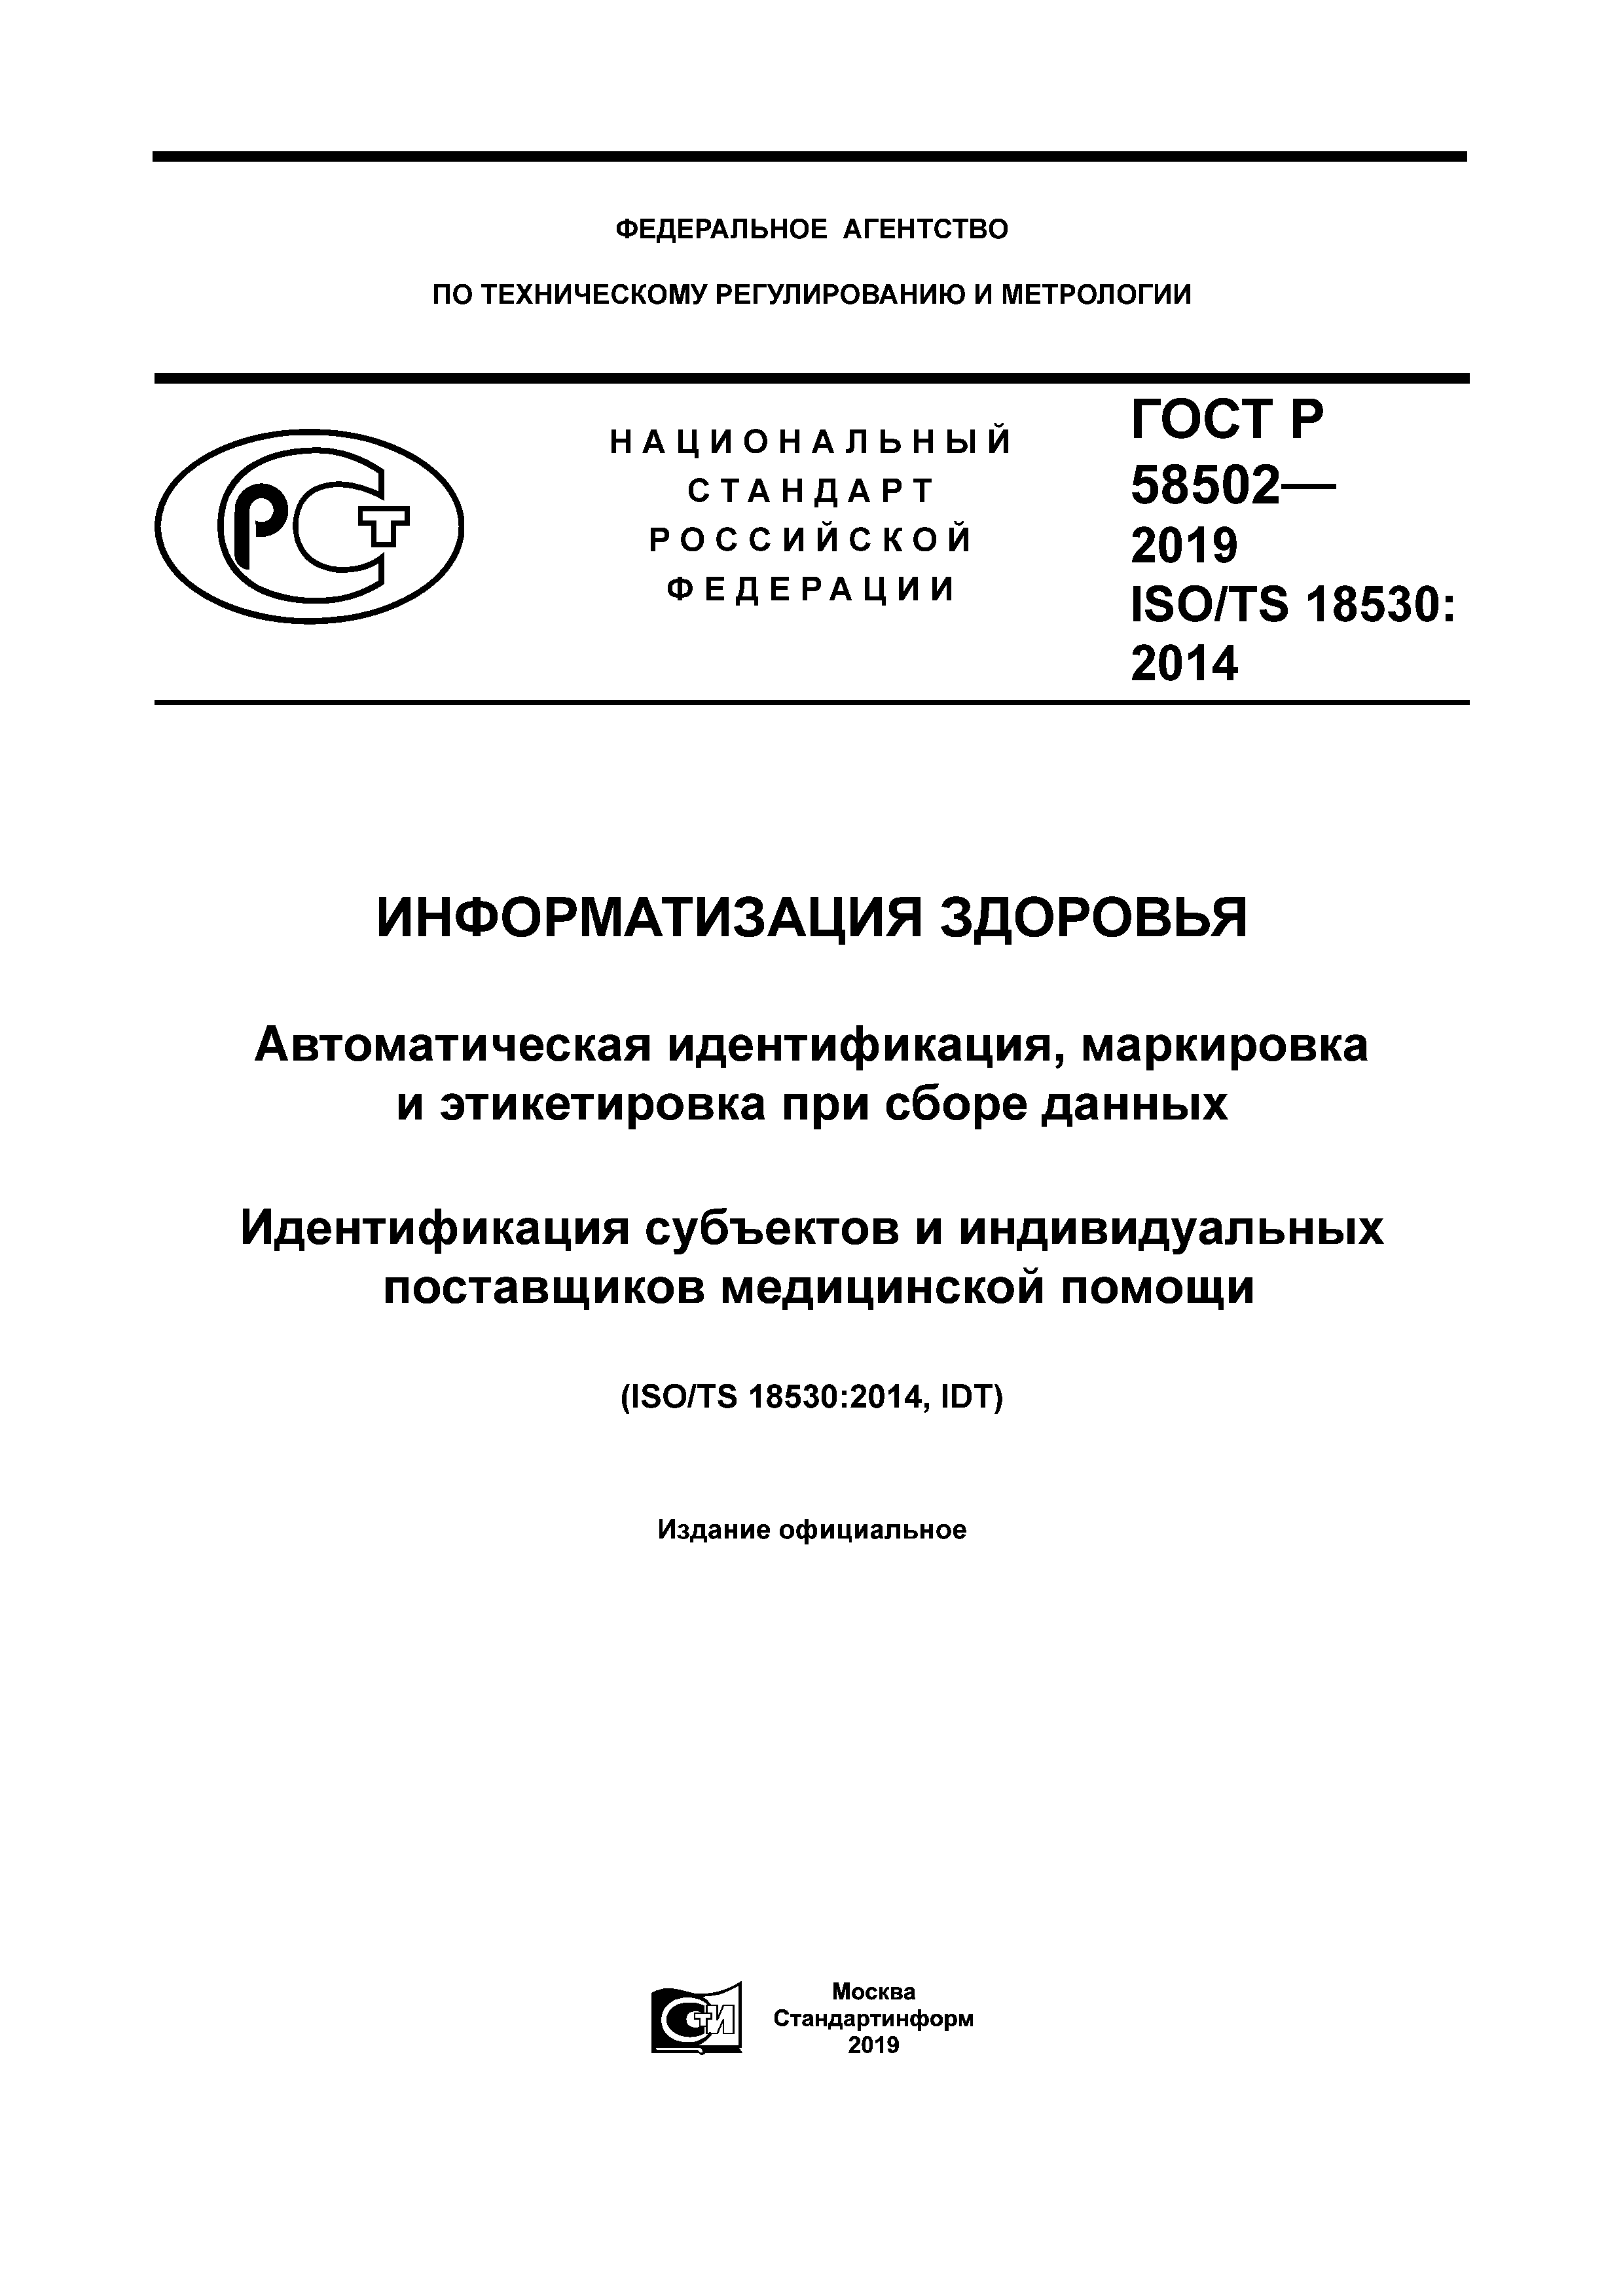 ГОСТ Р 58502-2019